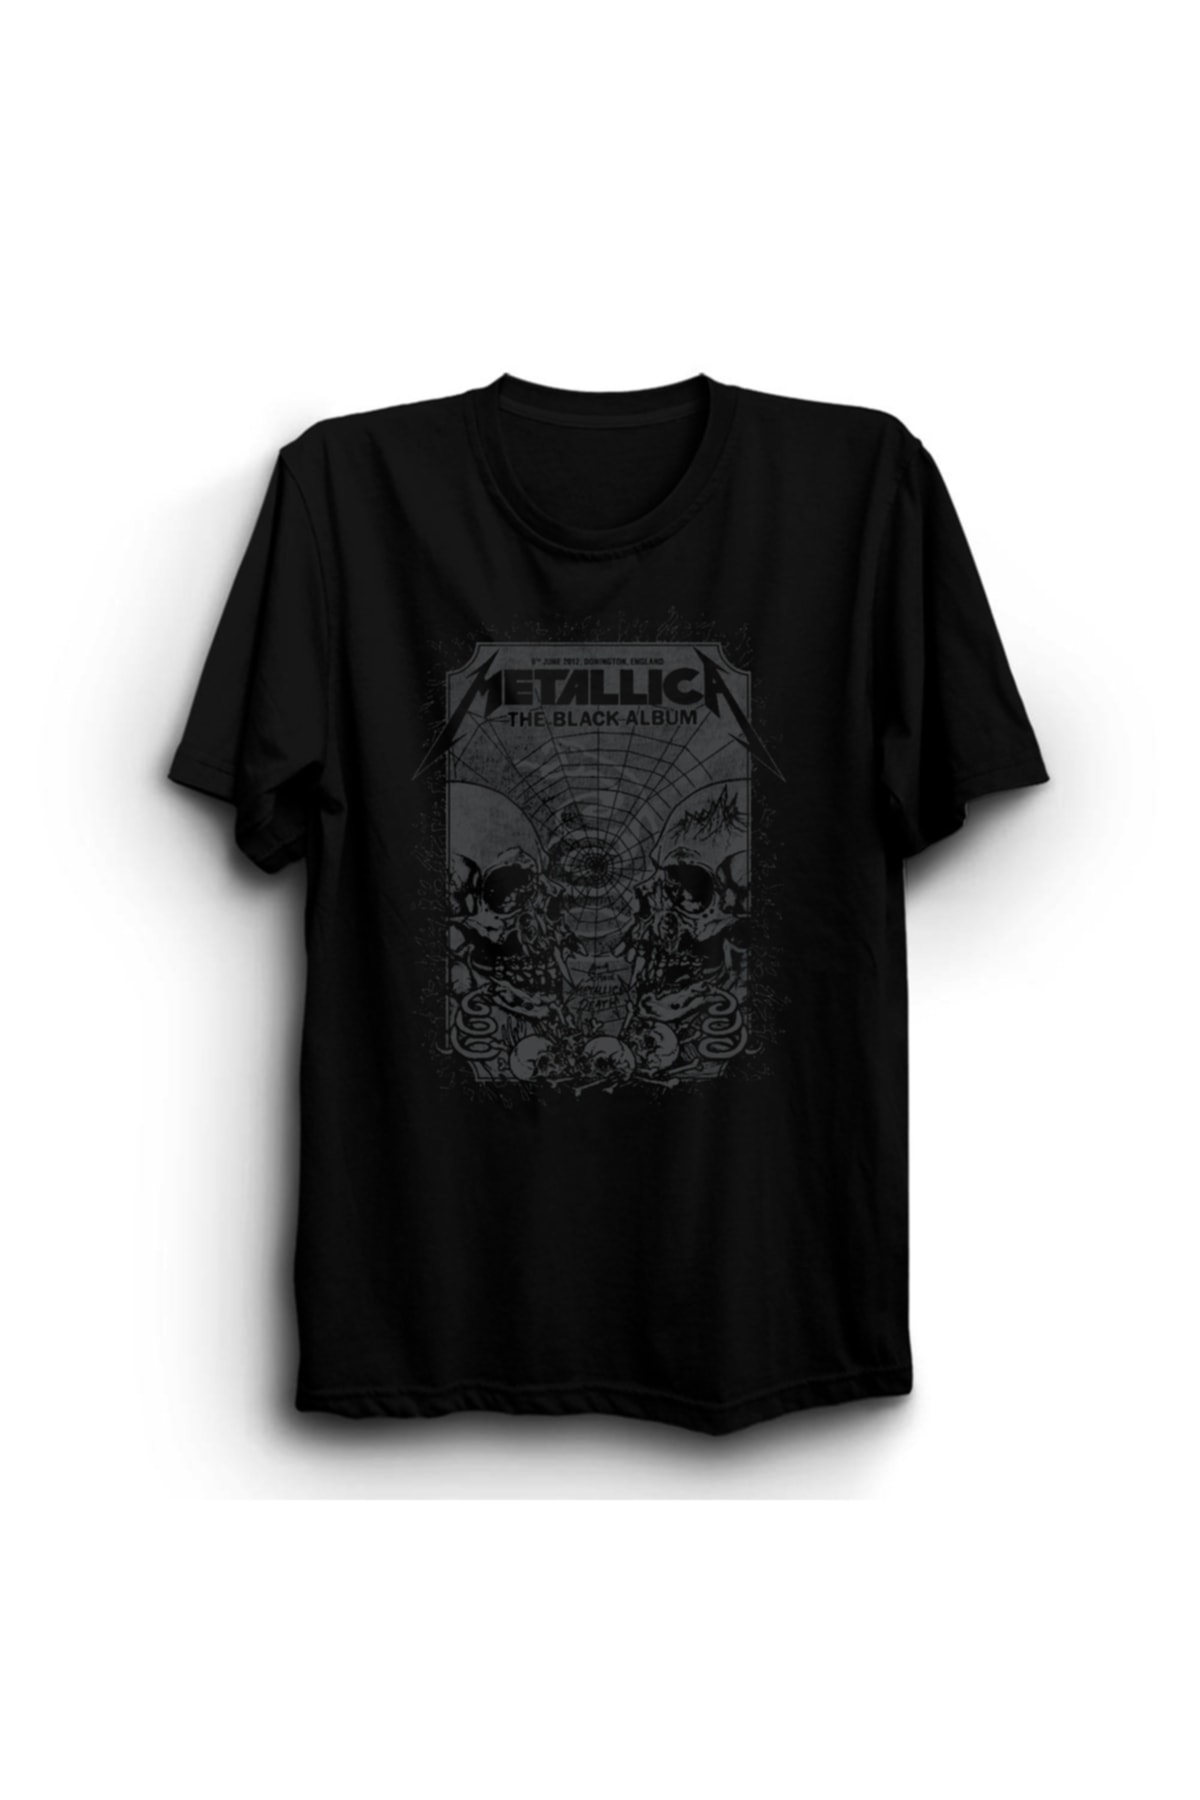 The Fame Metallica, Black Album, Rock, Metal Tişört PG7288